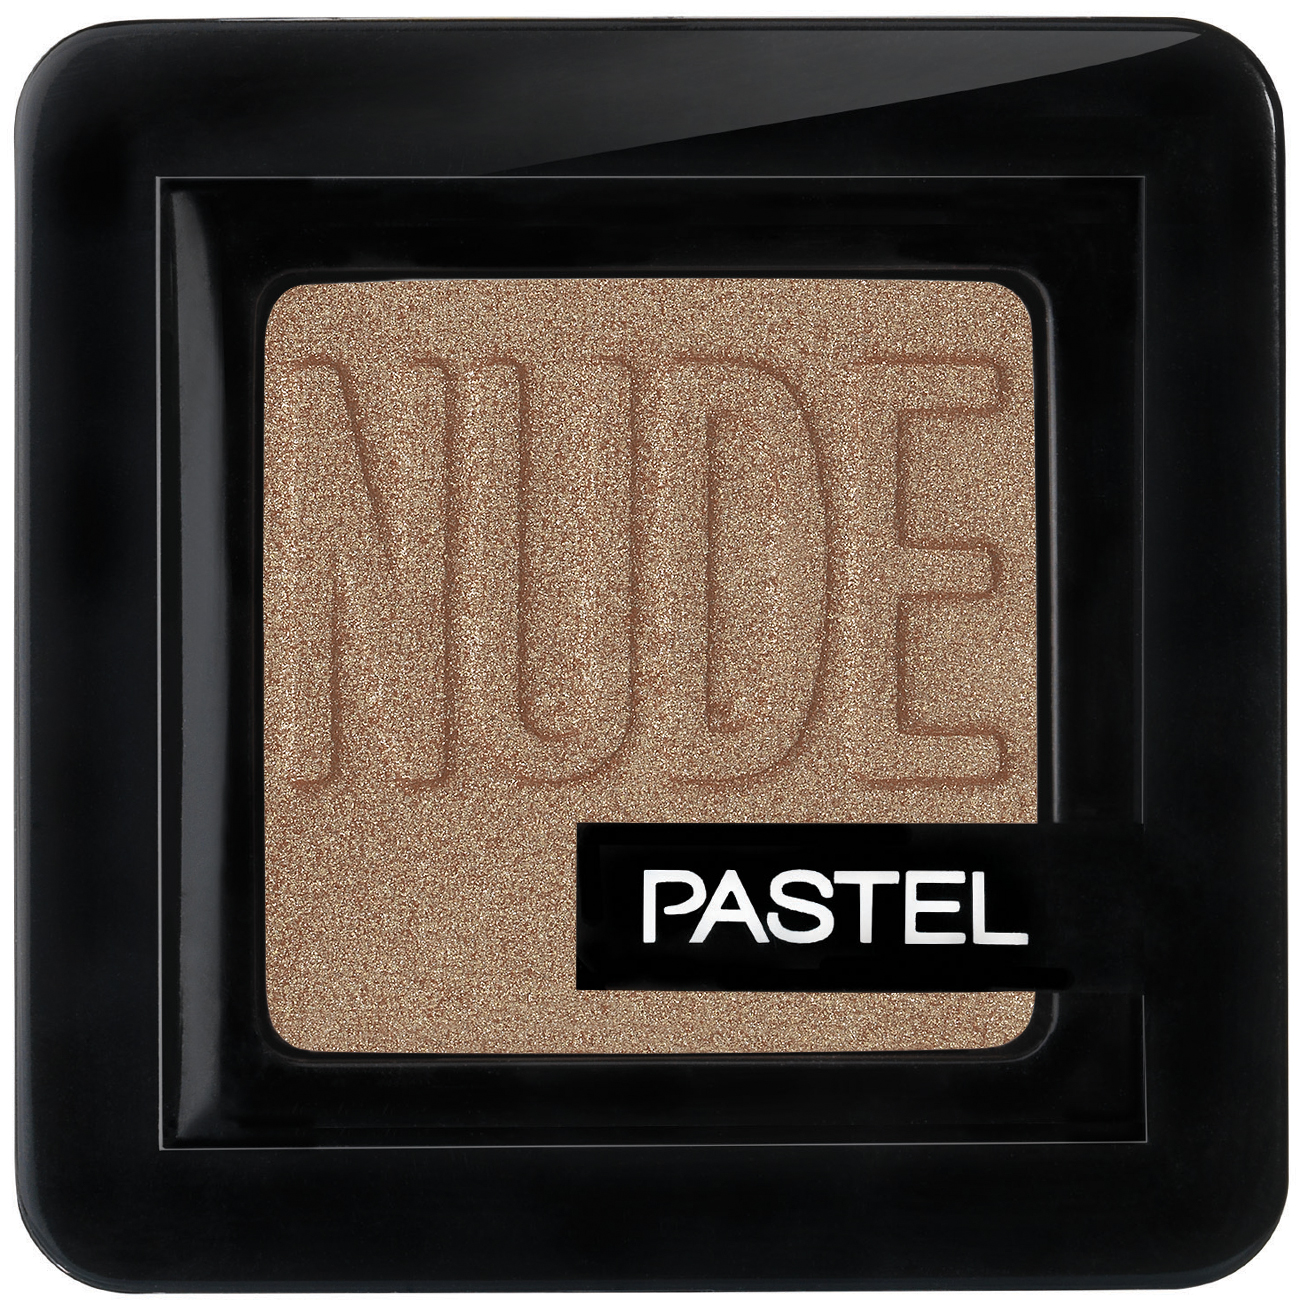 Pastel Nude Single Eyeshadow - Tekli Far 80 Sand